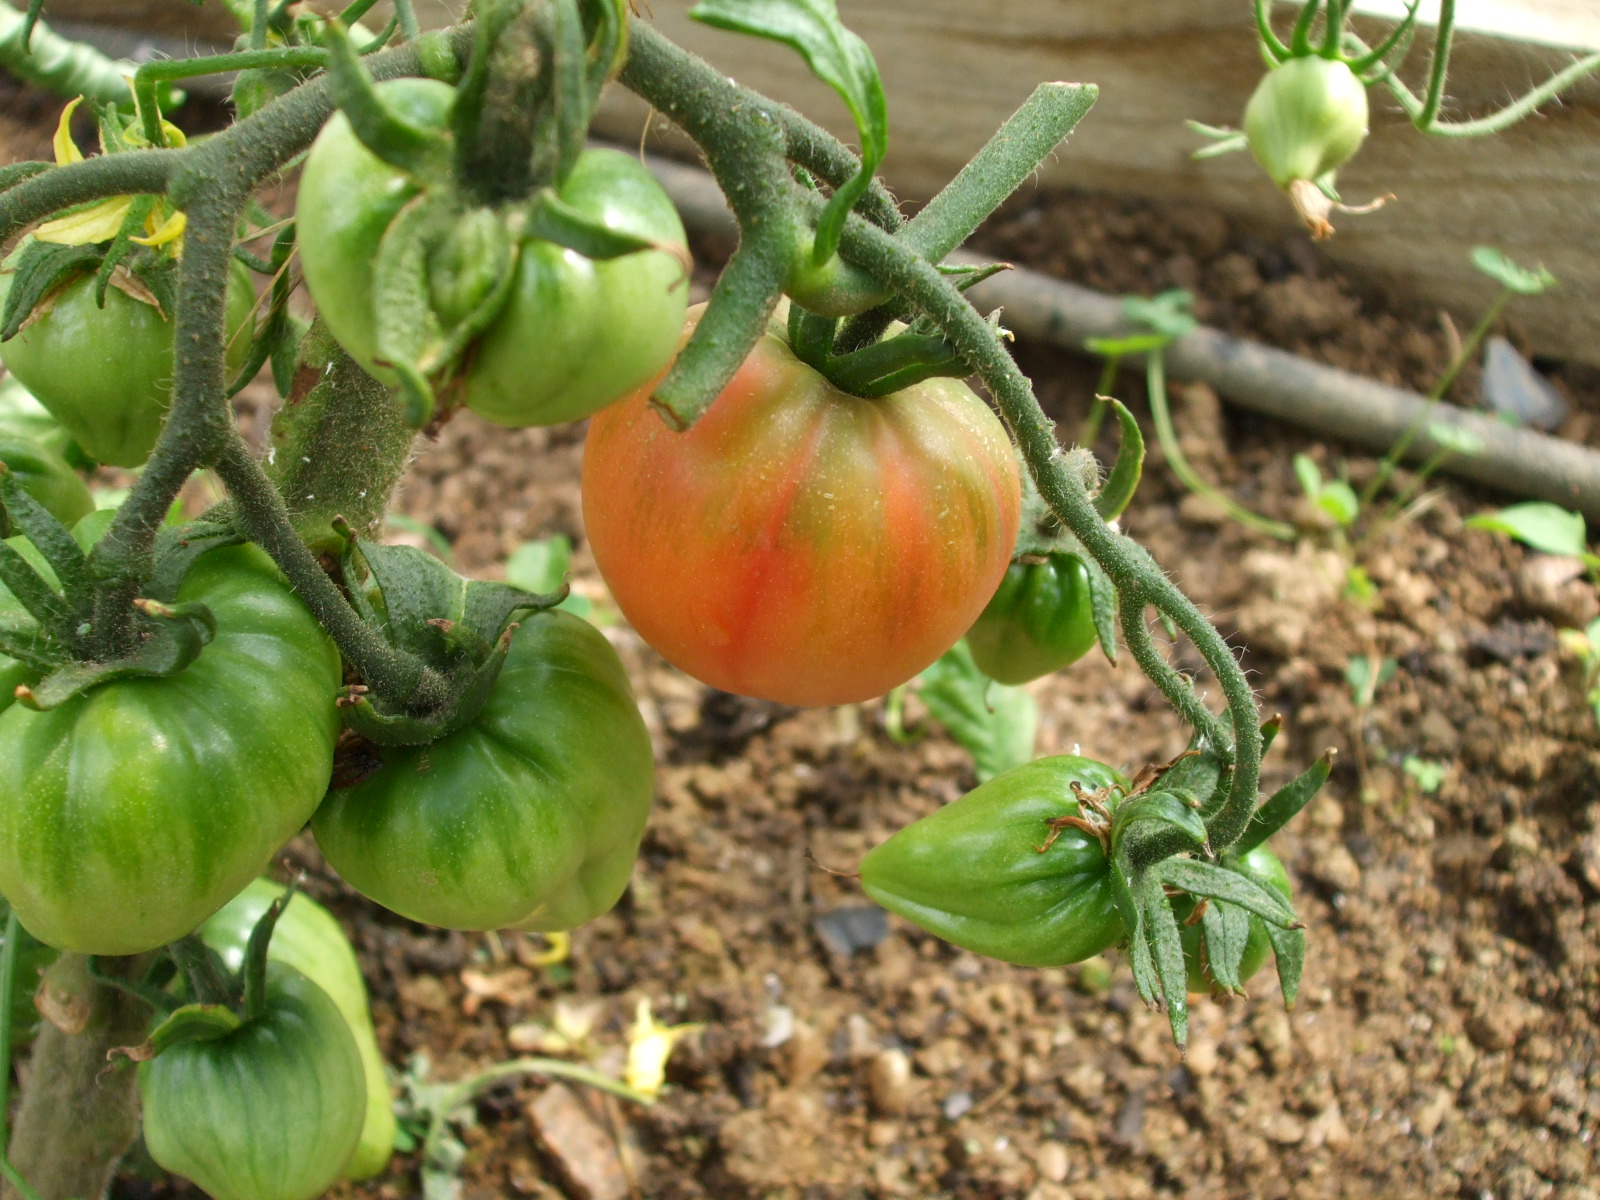 Mr Tomato King: My first tomato of the season ready to pick